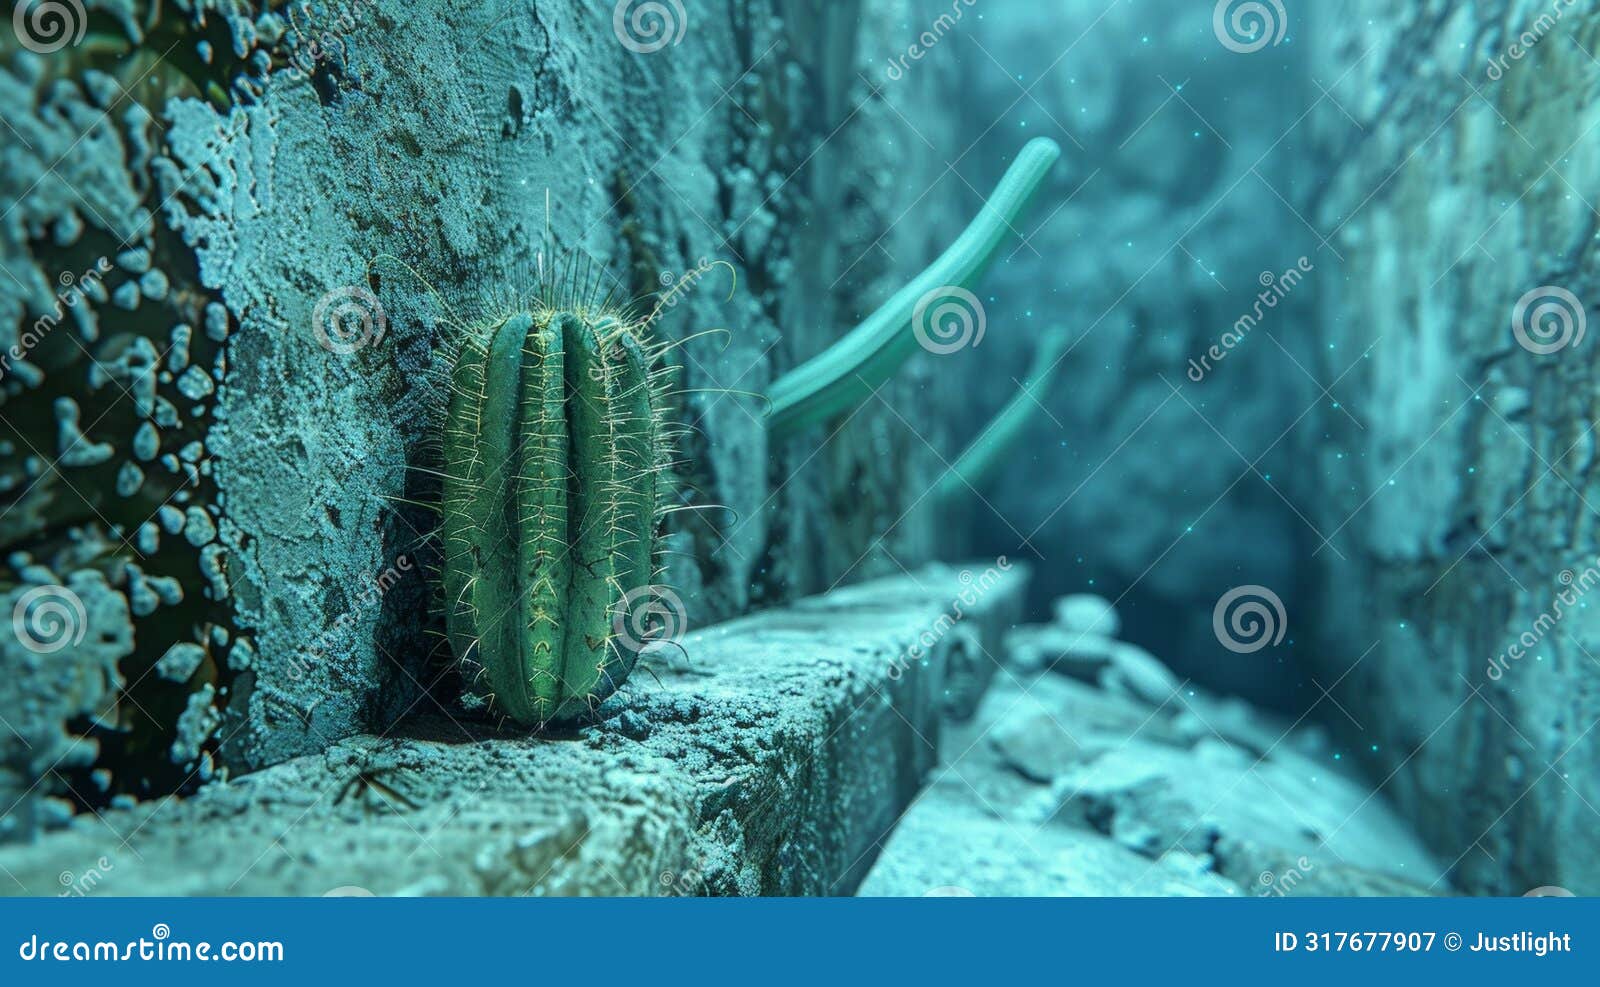 tucked away in a corner a small cactus represents the elusive neutrino